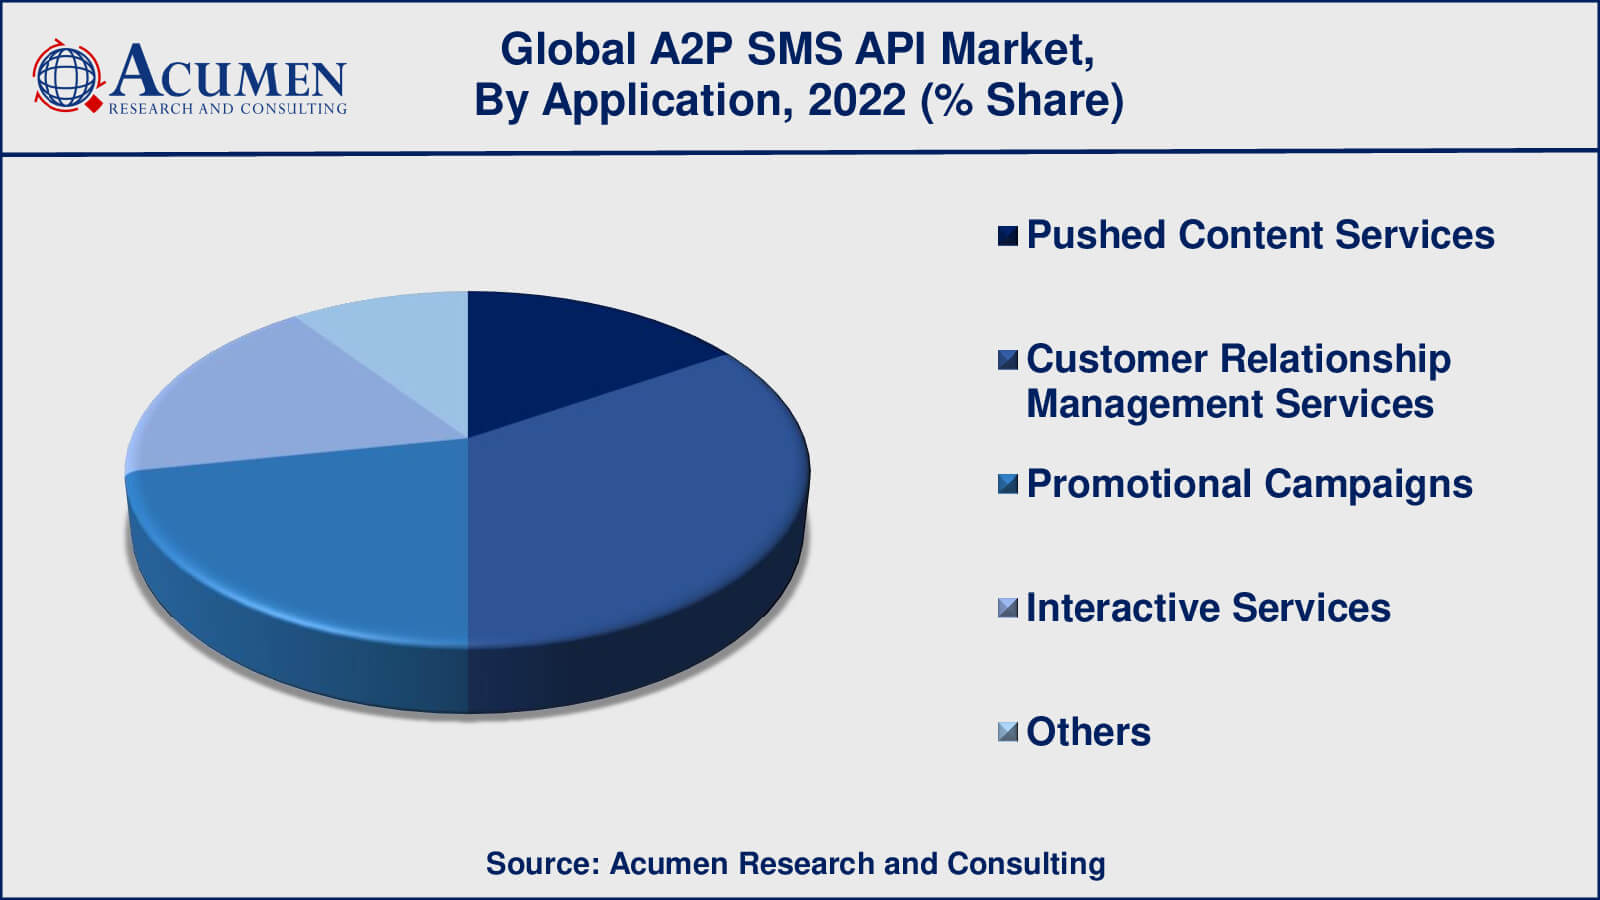 A2P SMS API Market Growth Factors